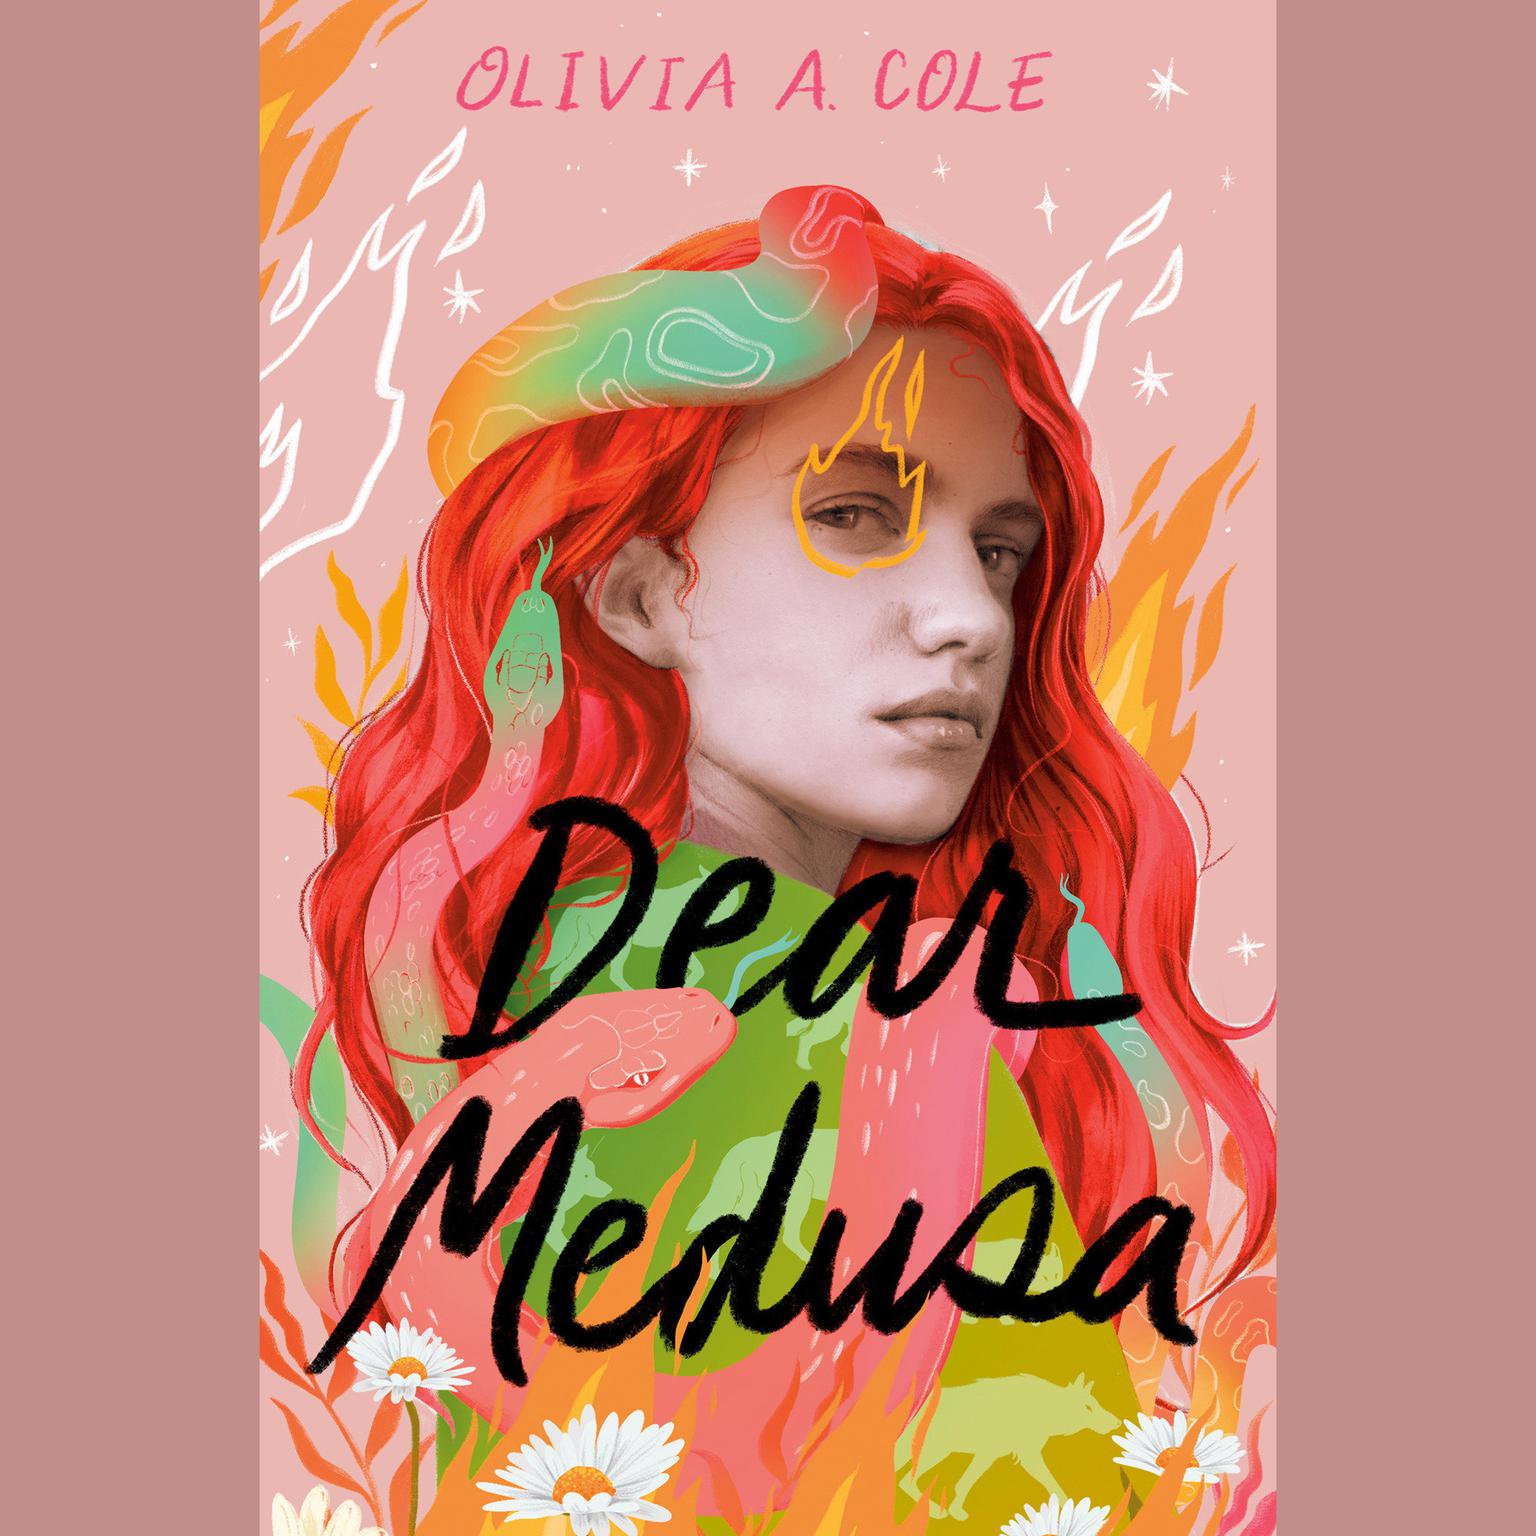 Dear Medusa: (A Novel in Verse) Audiobook, by Olivia A. Cole